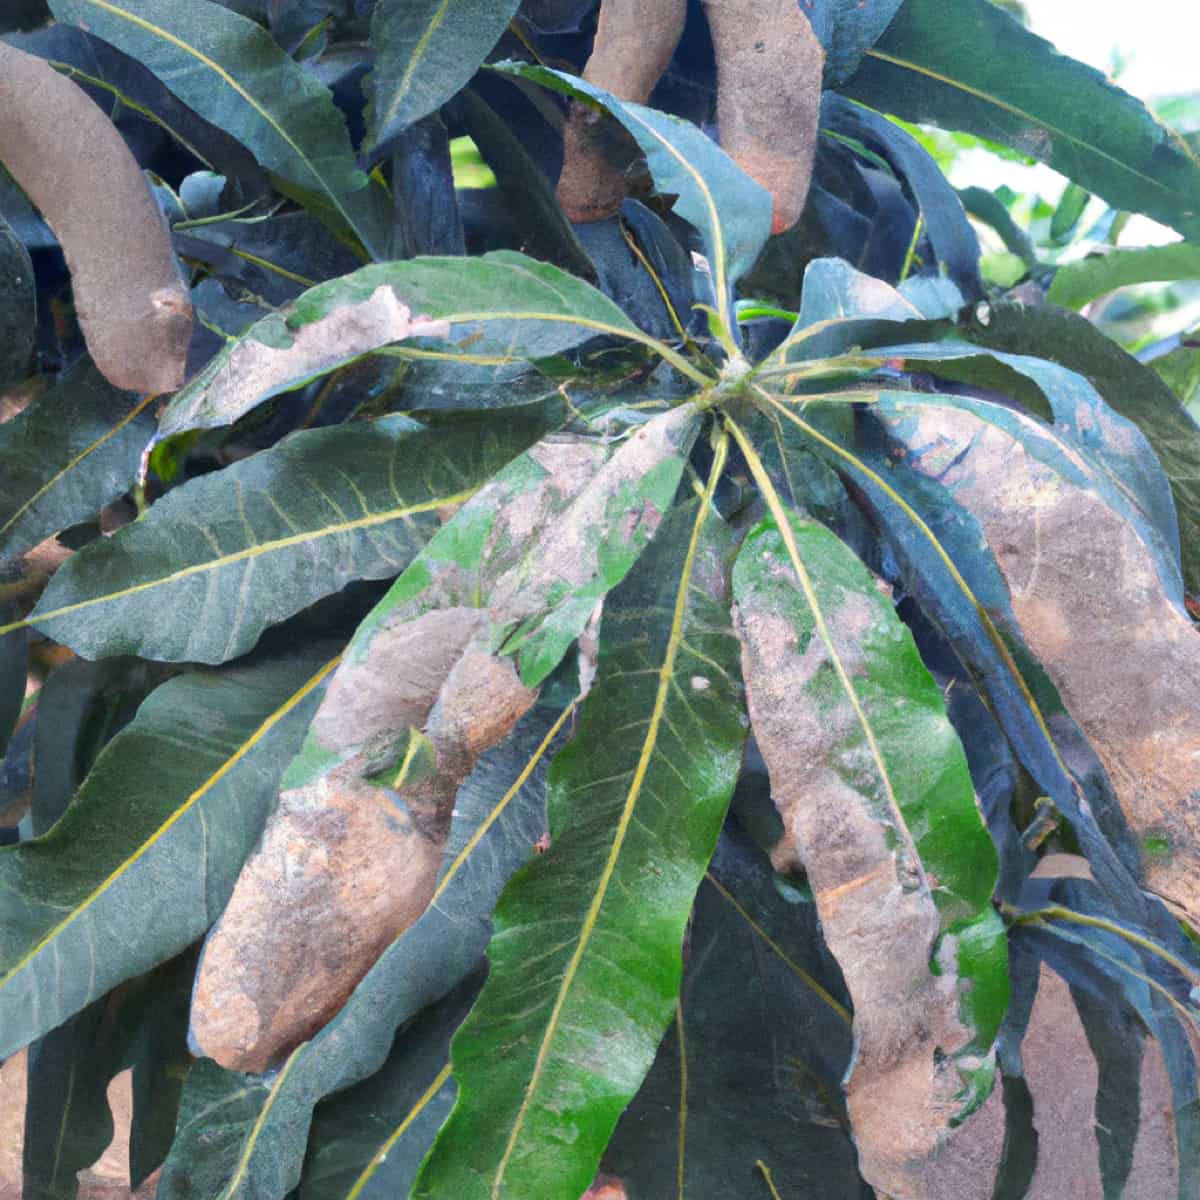 Mango Leaf Disease